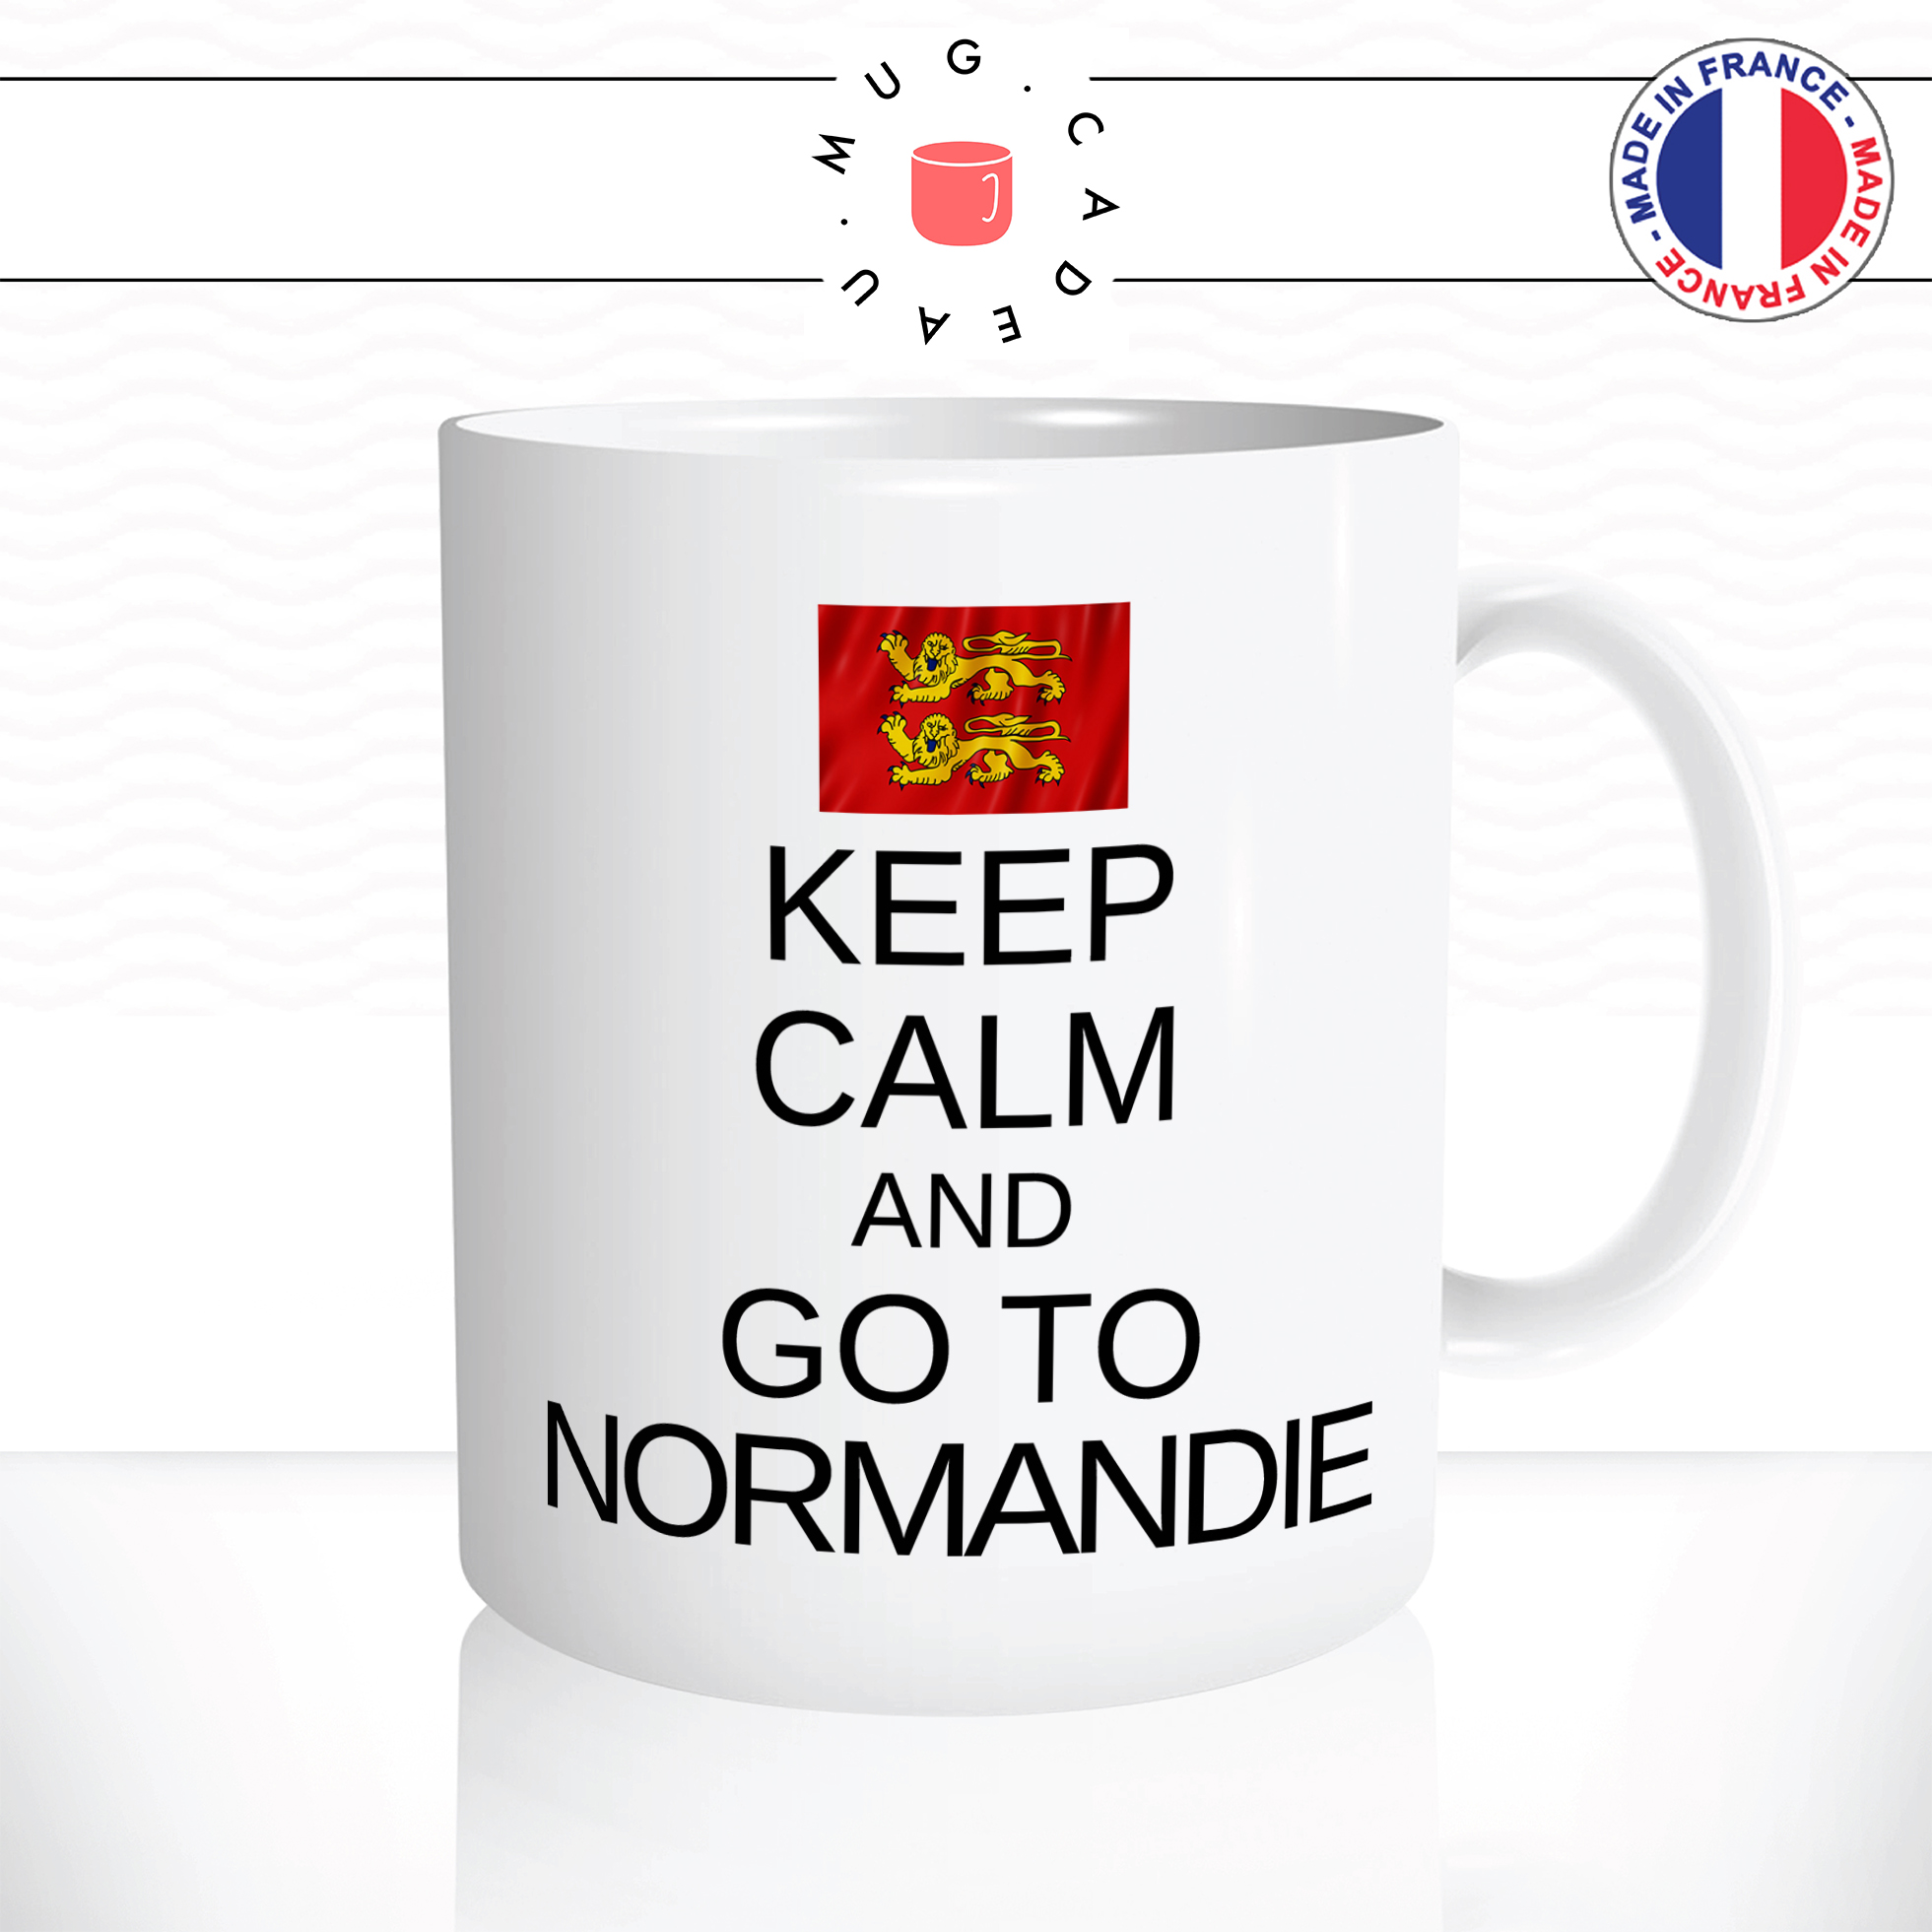 mug-tasse-keep-calm-and-go-to-normandie-normand-drapeau-france-nord-region-humour-fun-café-thé-idée-cadeau-originale-personnalisée-2min